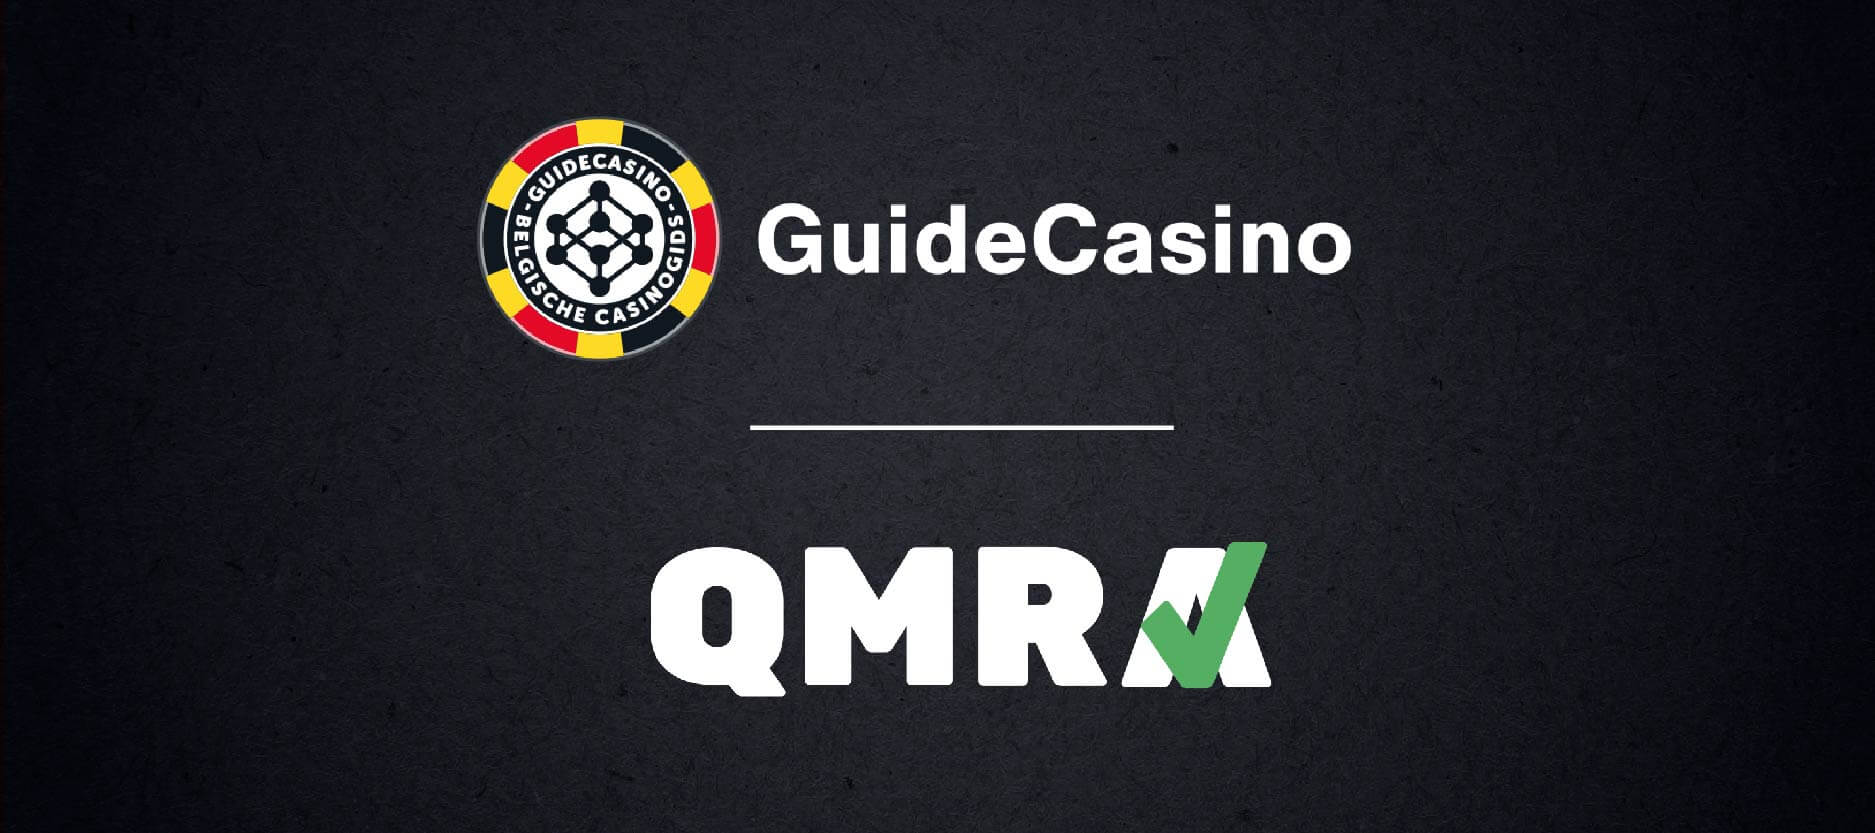 QMRA-keurmerk voor GuideCasino.be